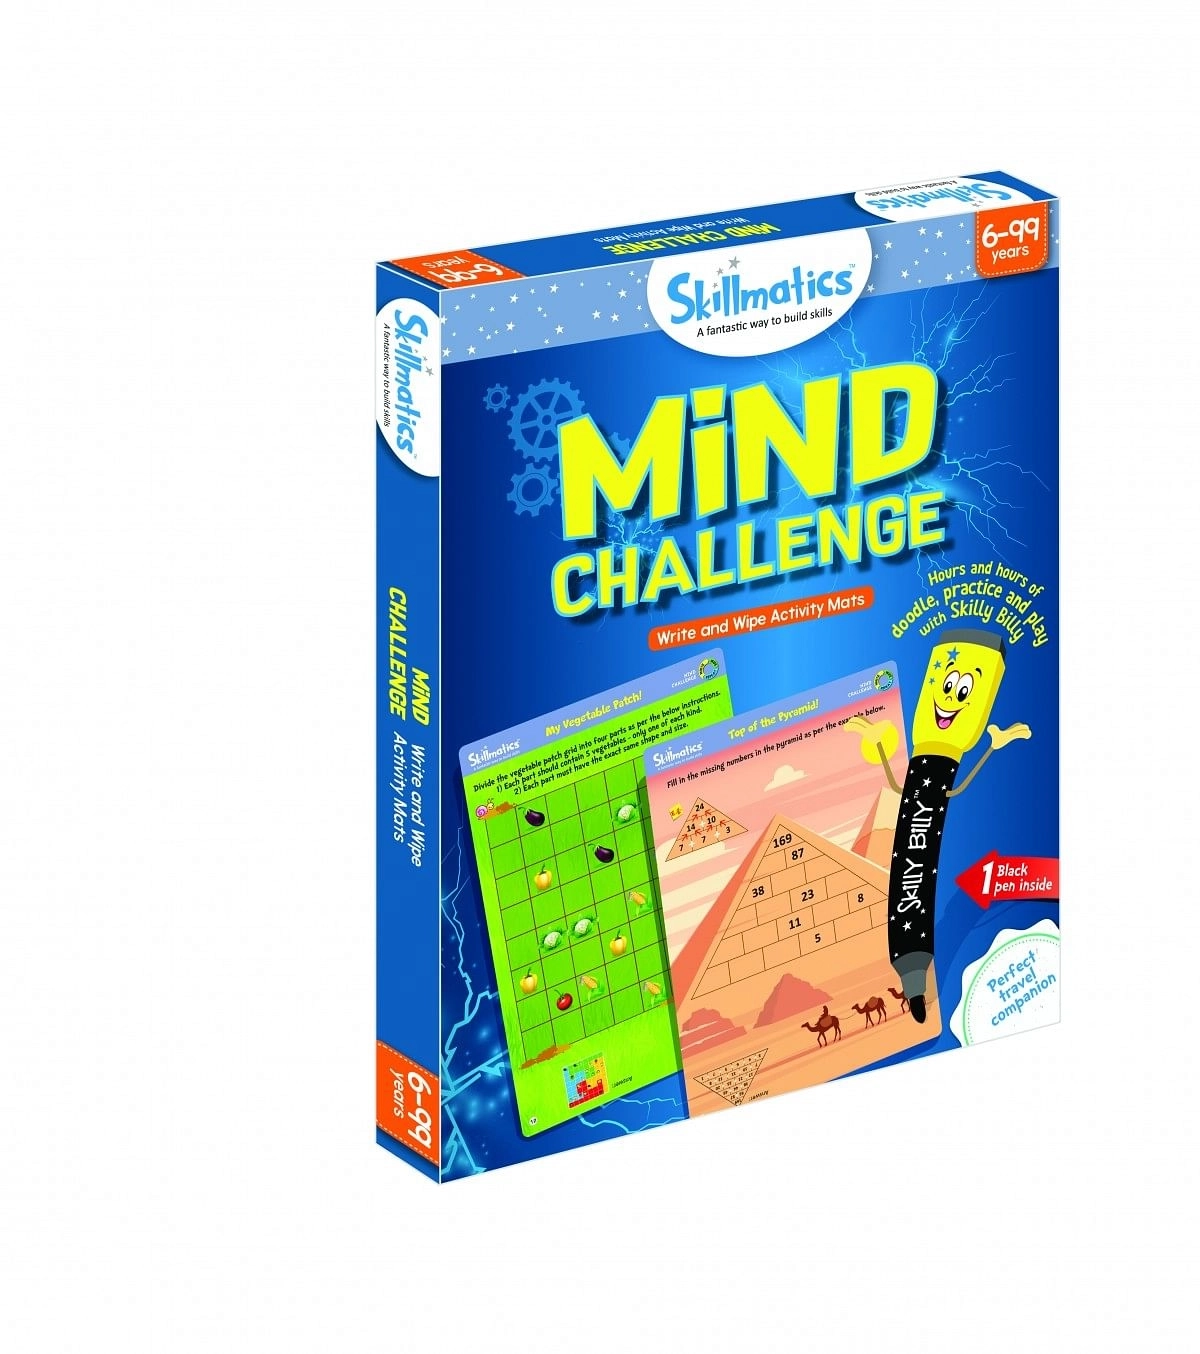  Skillmatics Mind Challenge Games for Kids age 6Y+ 